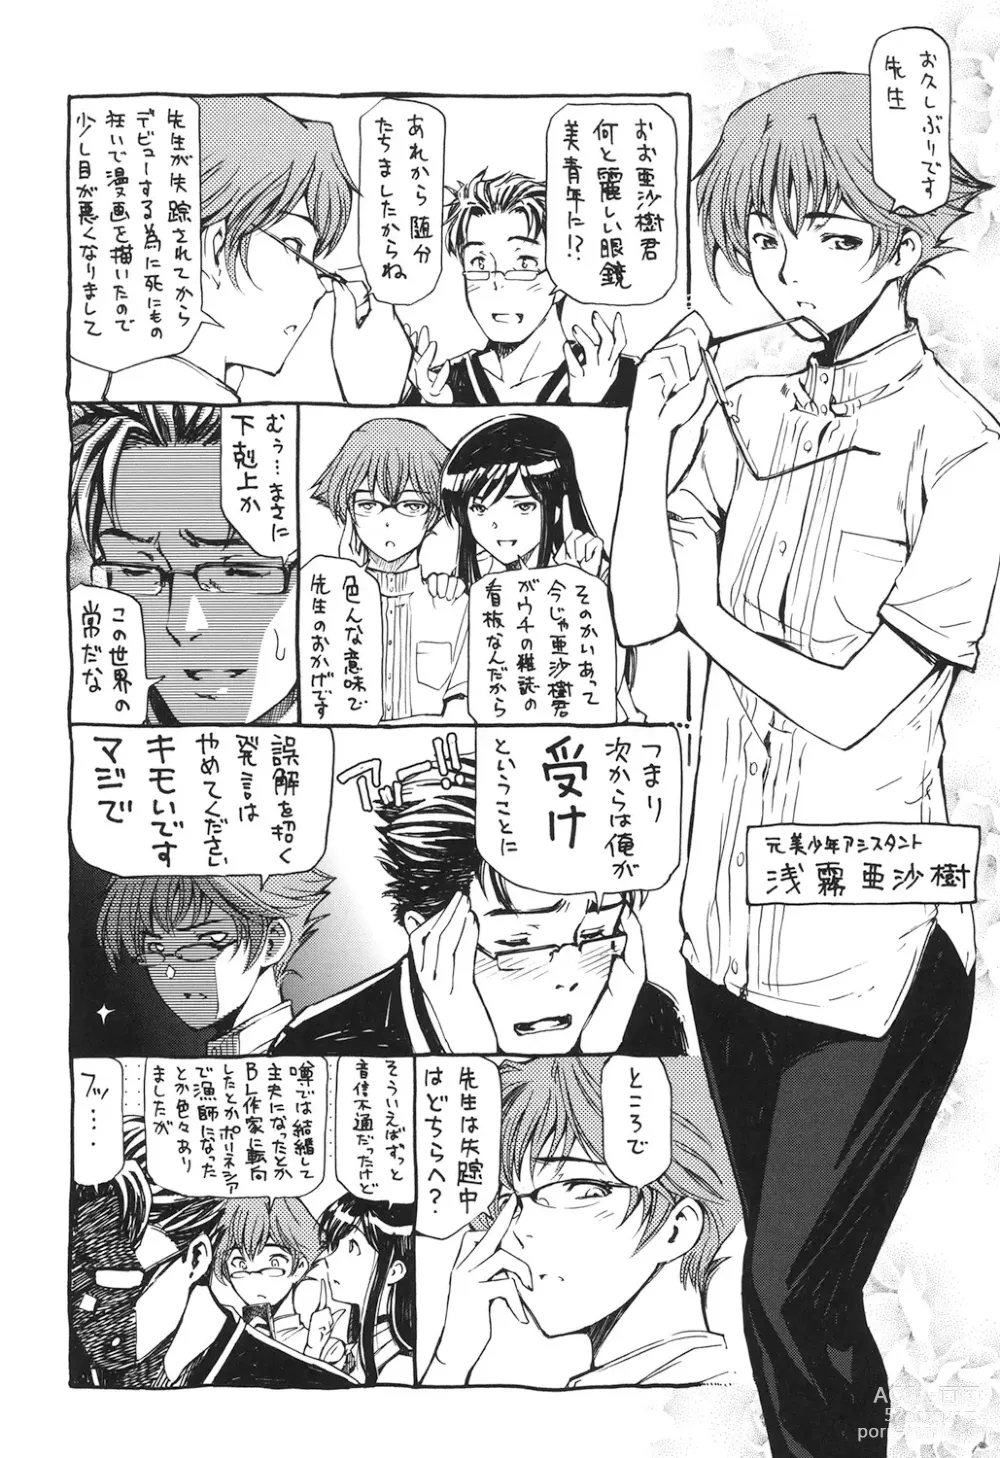 Page 252 of manga Kannou no Houteishiki